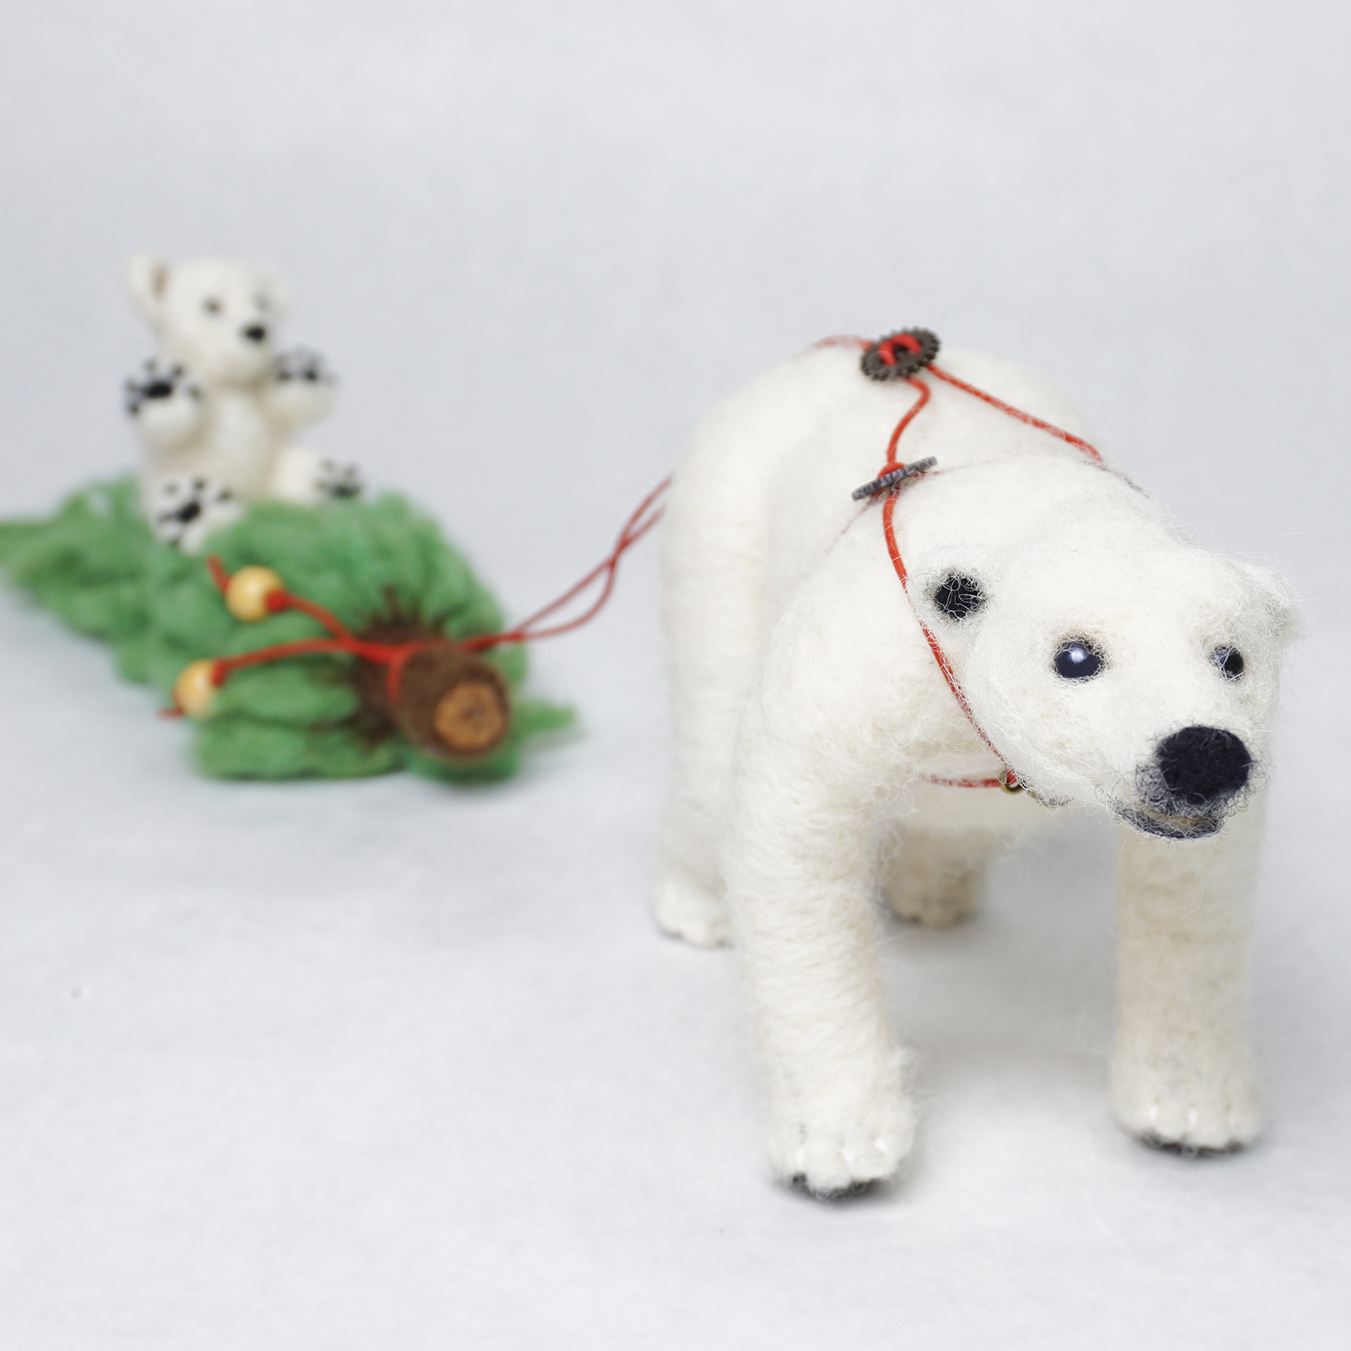 Happily Hauling. Anthropomorphic polar bear sculpture